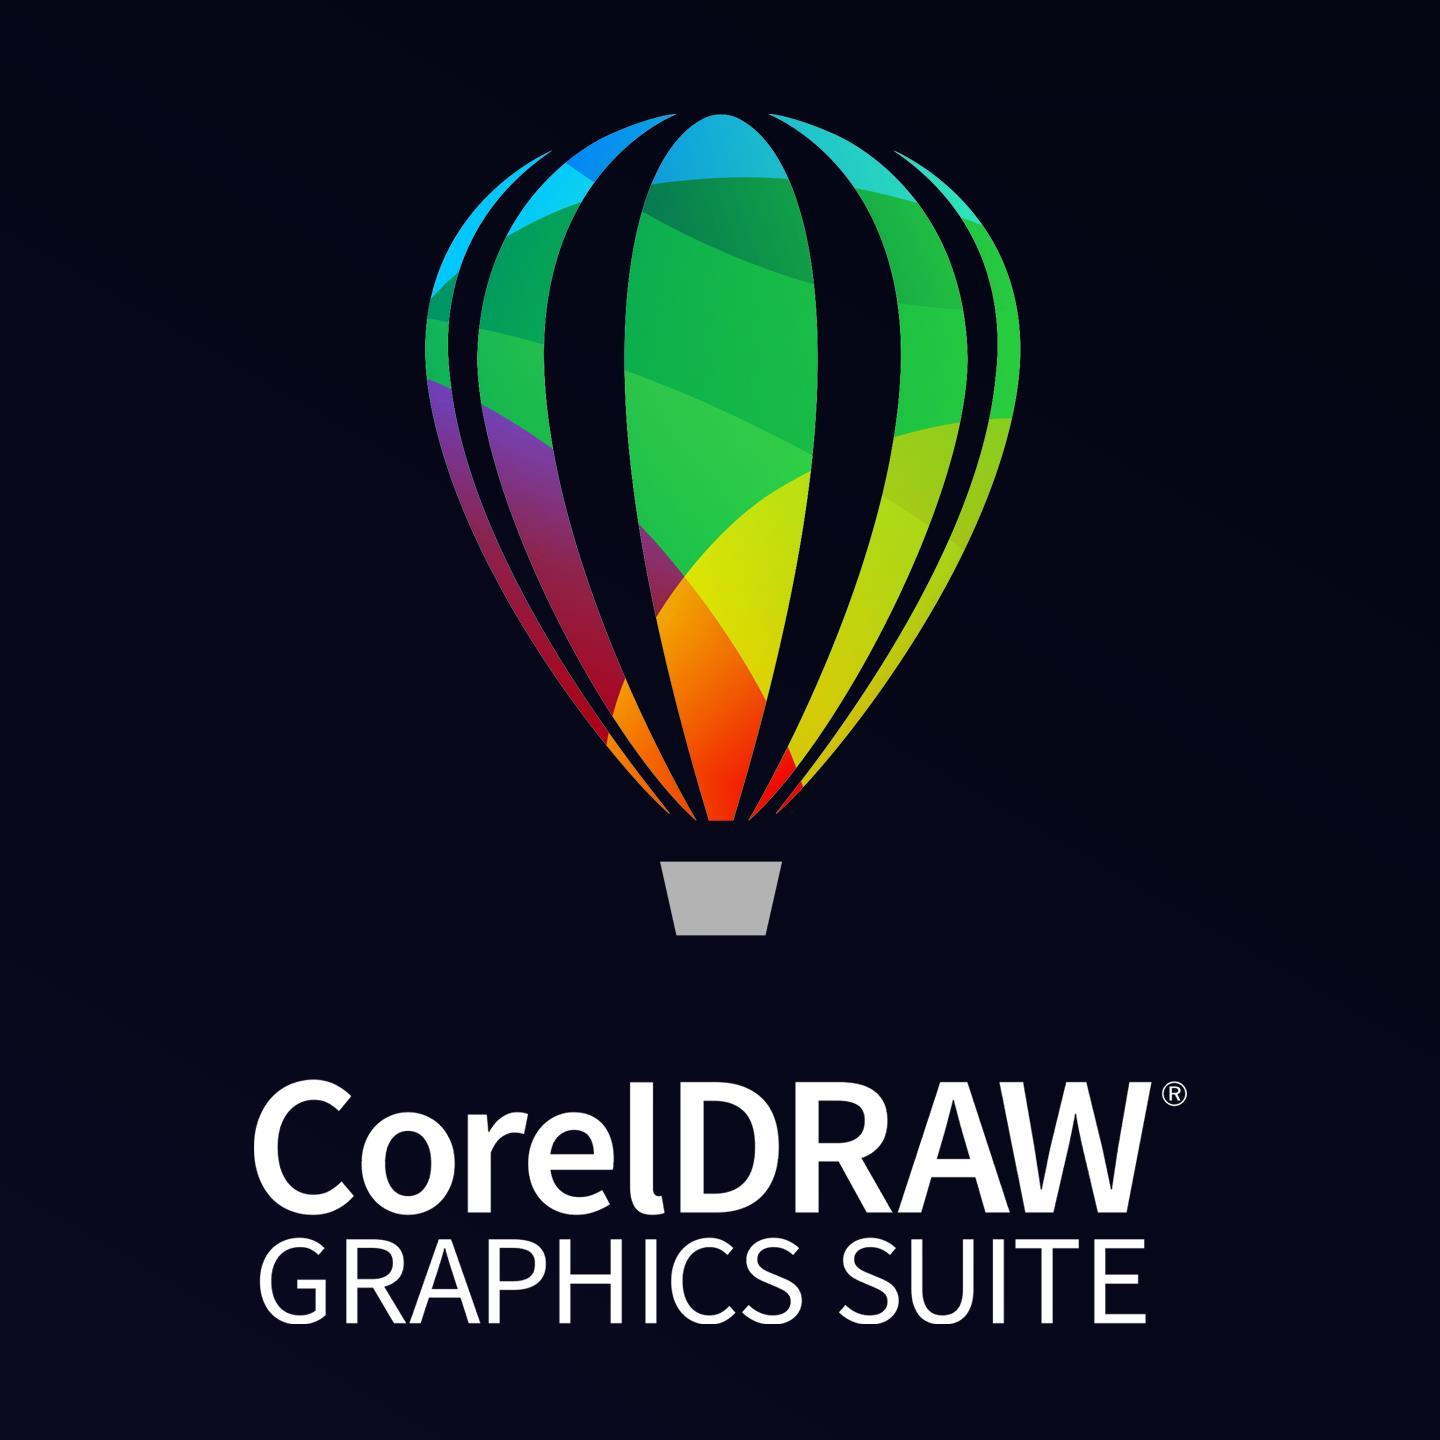 CorelDRAW Graphics Suite - Abonnement-Lizenz (3 Jahre) - 1 Benutzer - Win - Multi-Lingual